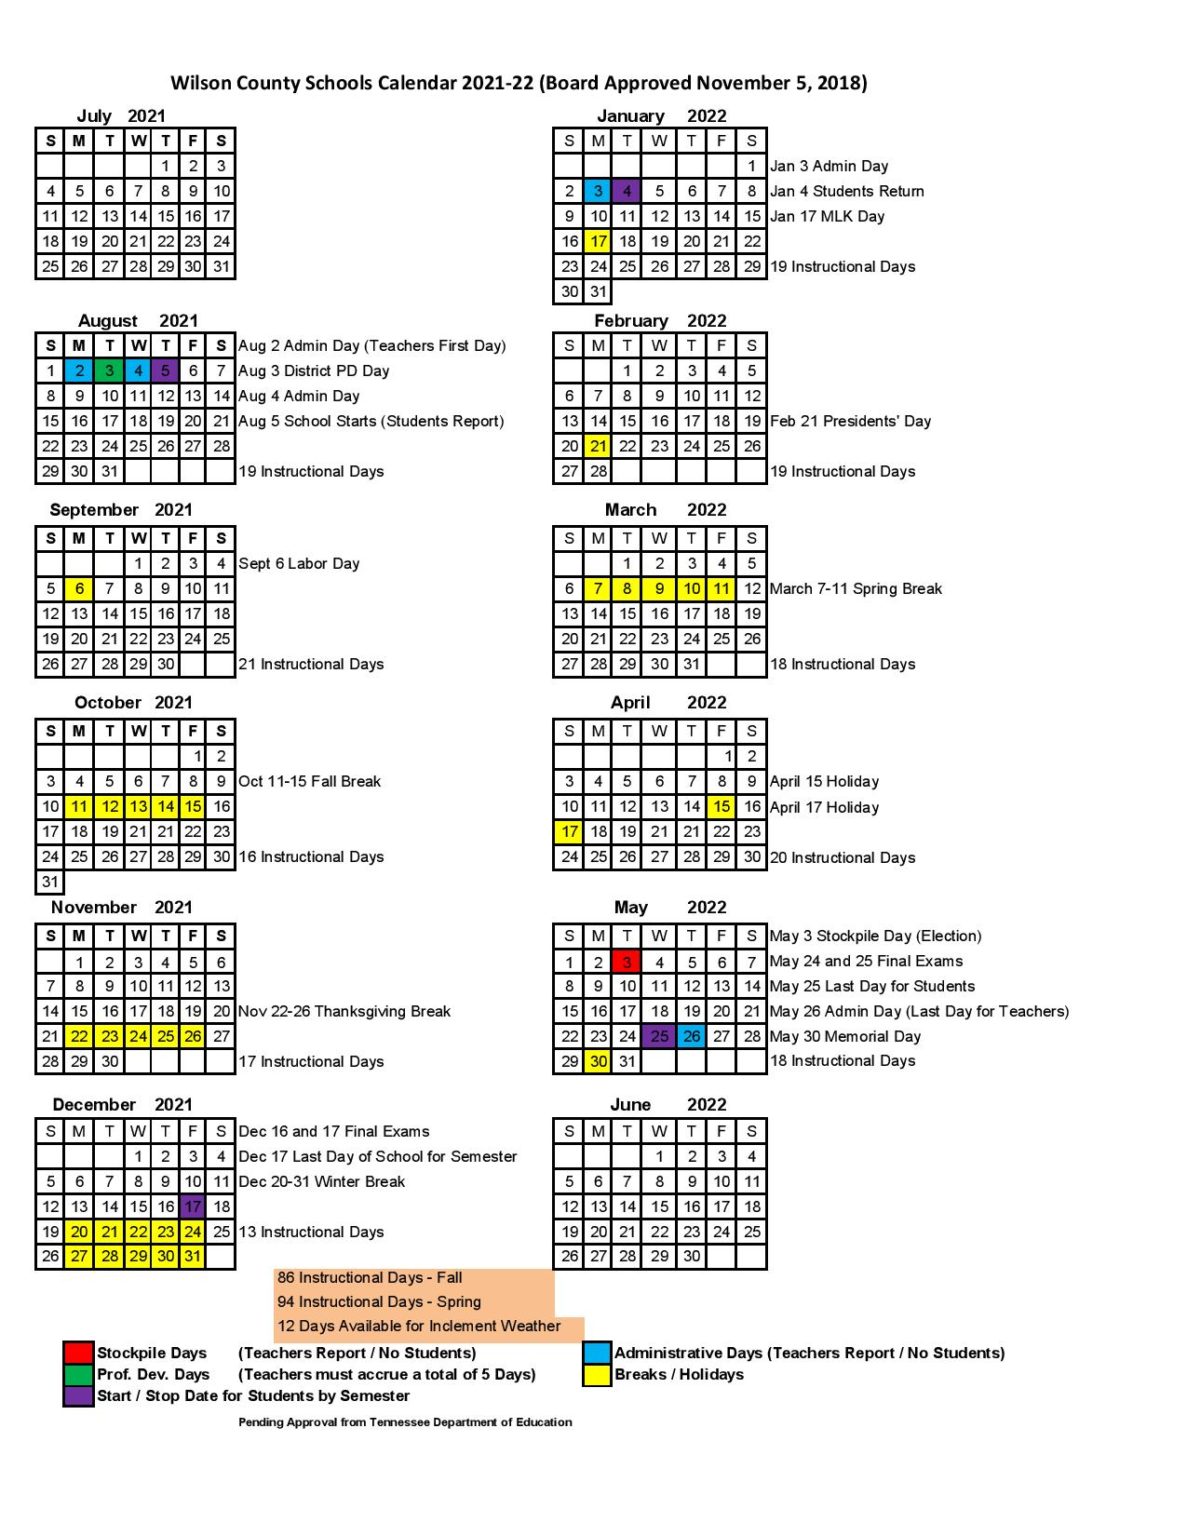 Wilson County Schools Calendar 2021 2022 in PDF